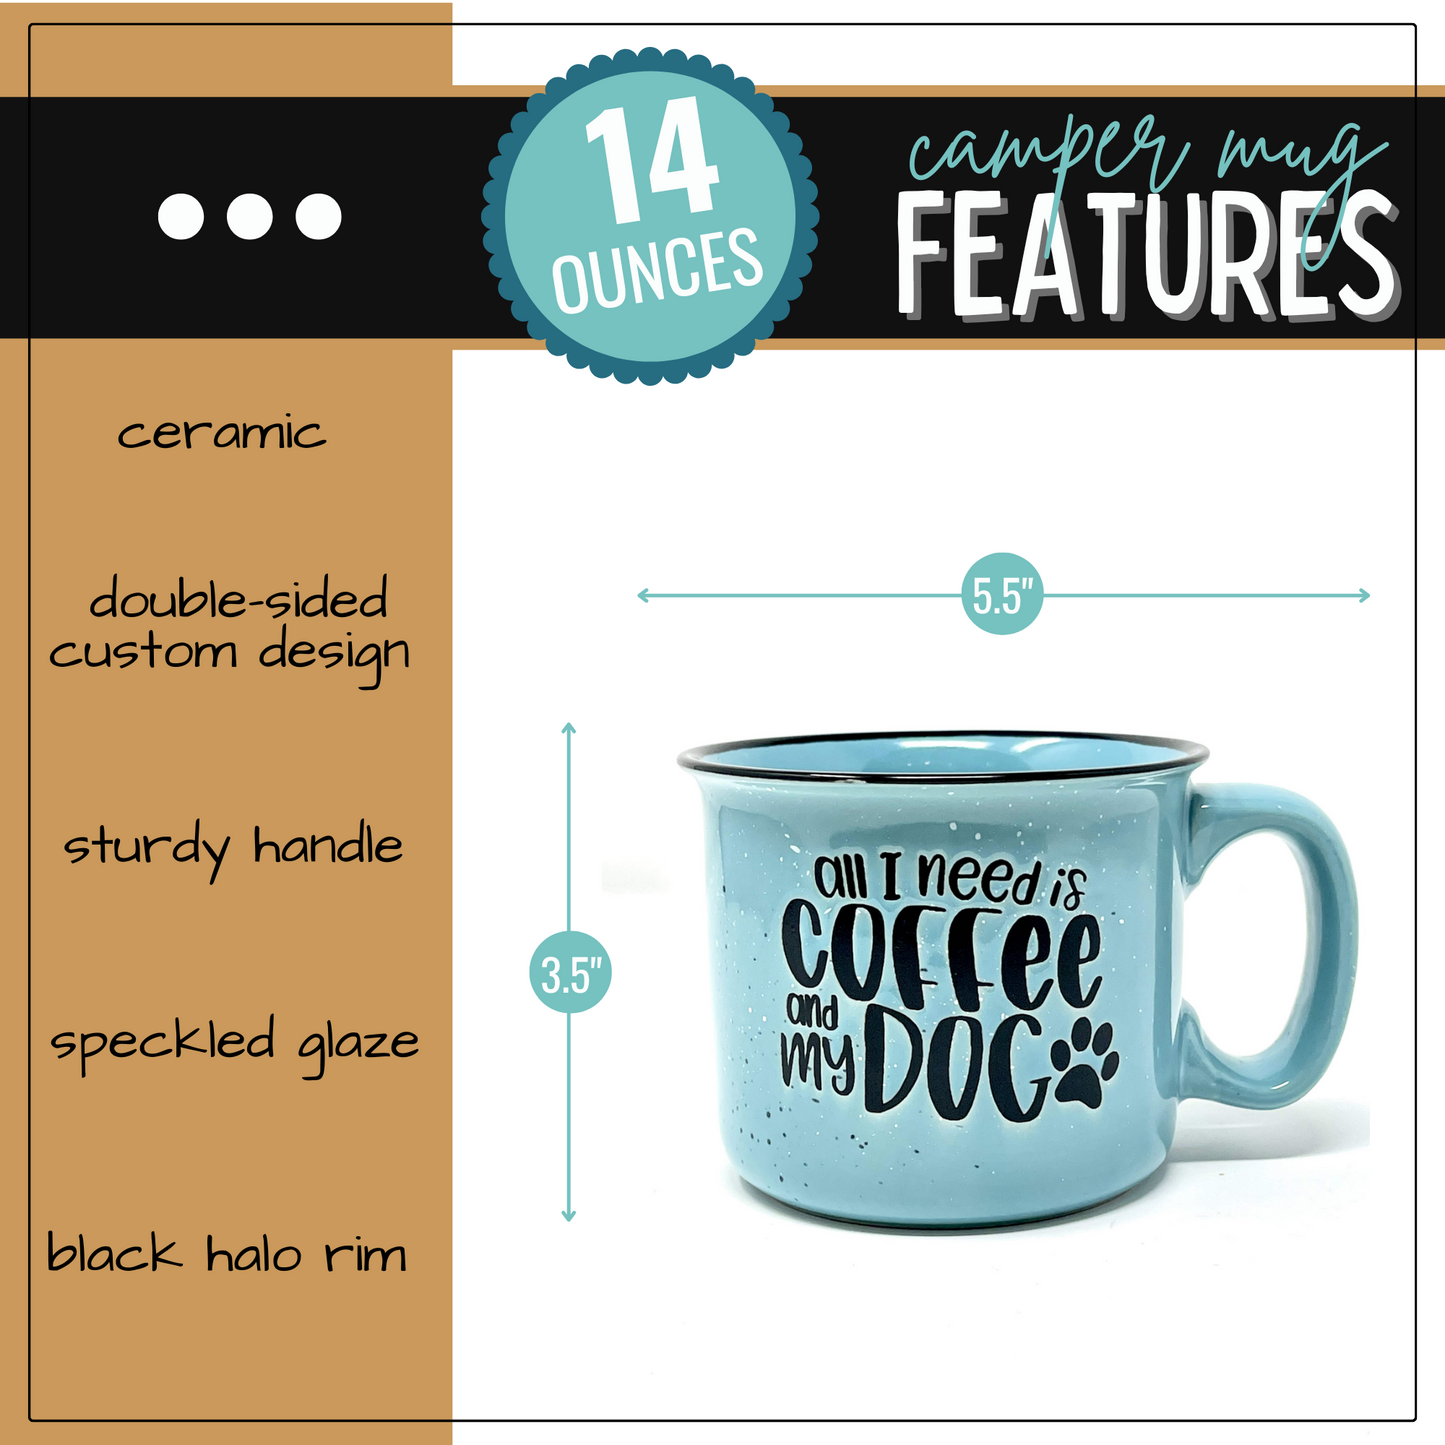 All I Need is Coffee and my Dog 15 oz Teal Ceramic Mug for Dog Lovers